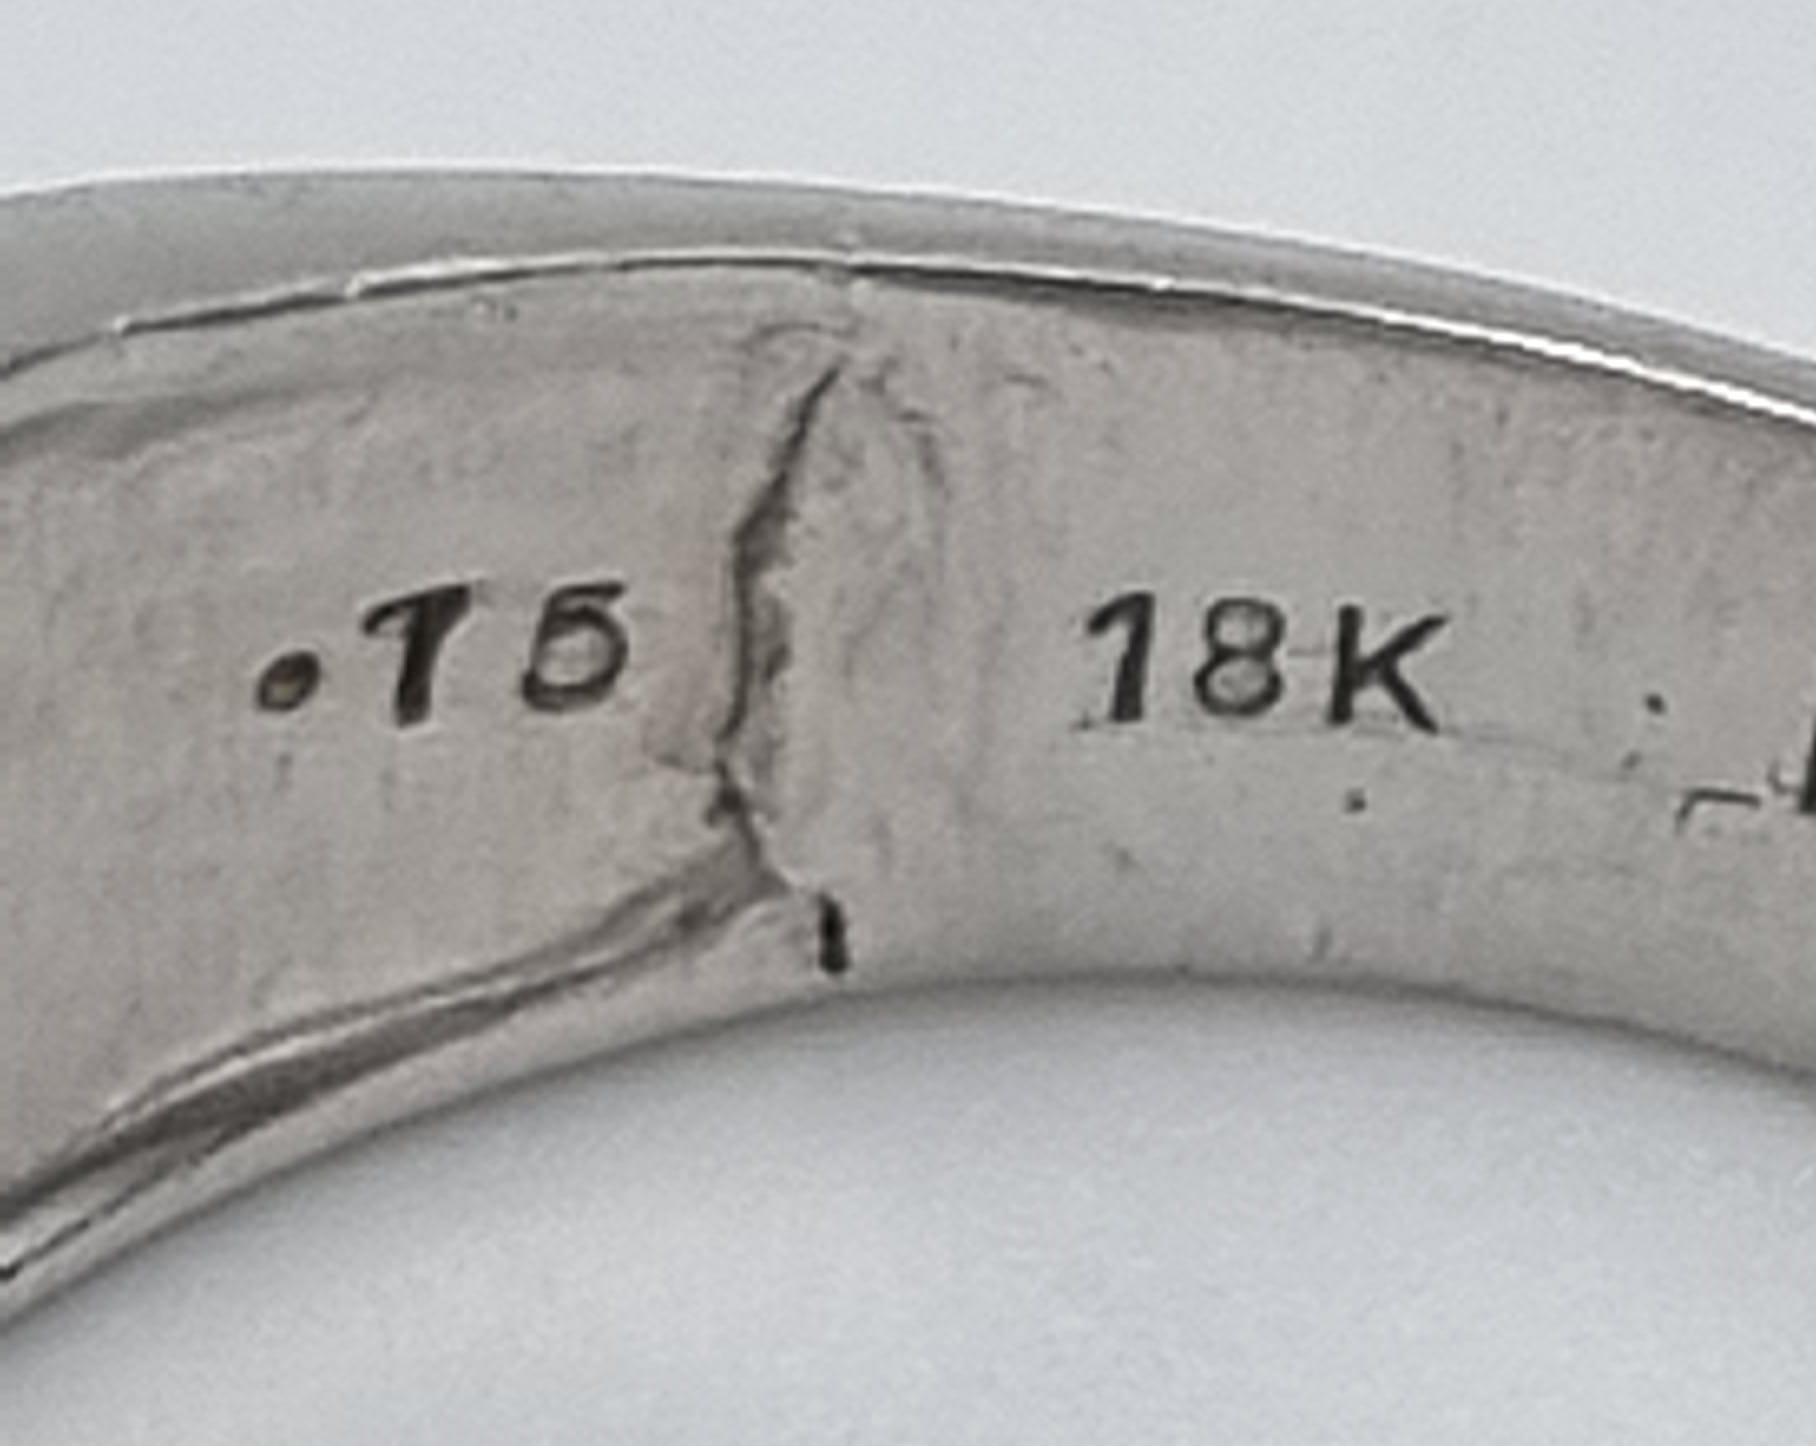 18K WHITE GOLD DIAMOND BAND RING 0.75CT SIZE S 11G. - Image 4 of 4